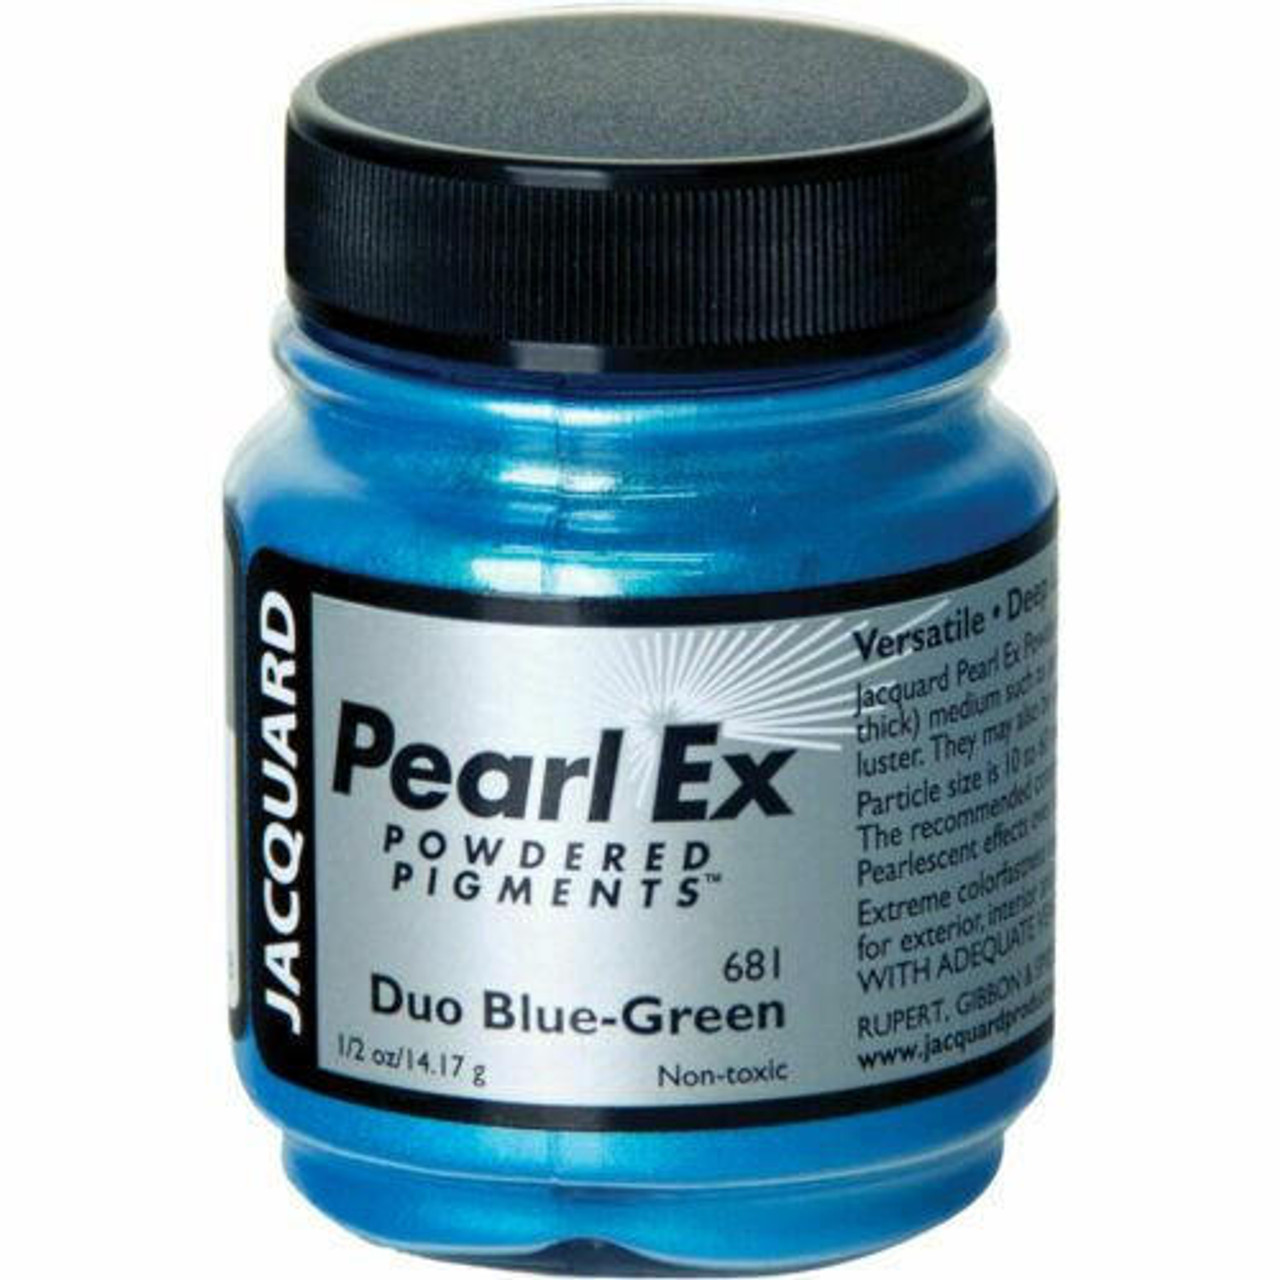 Pearl Ex Powdered Pigments